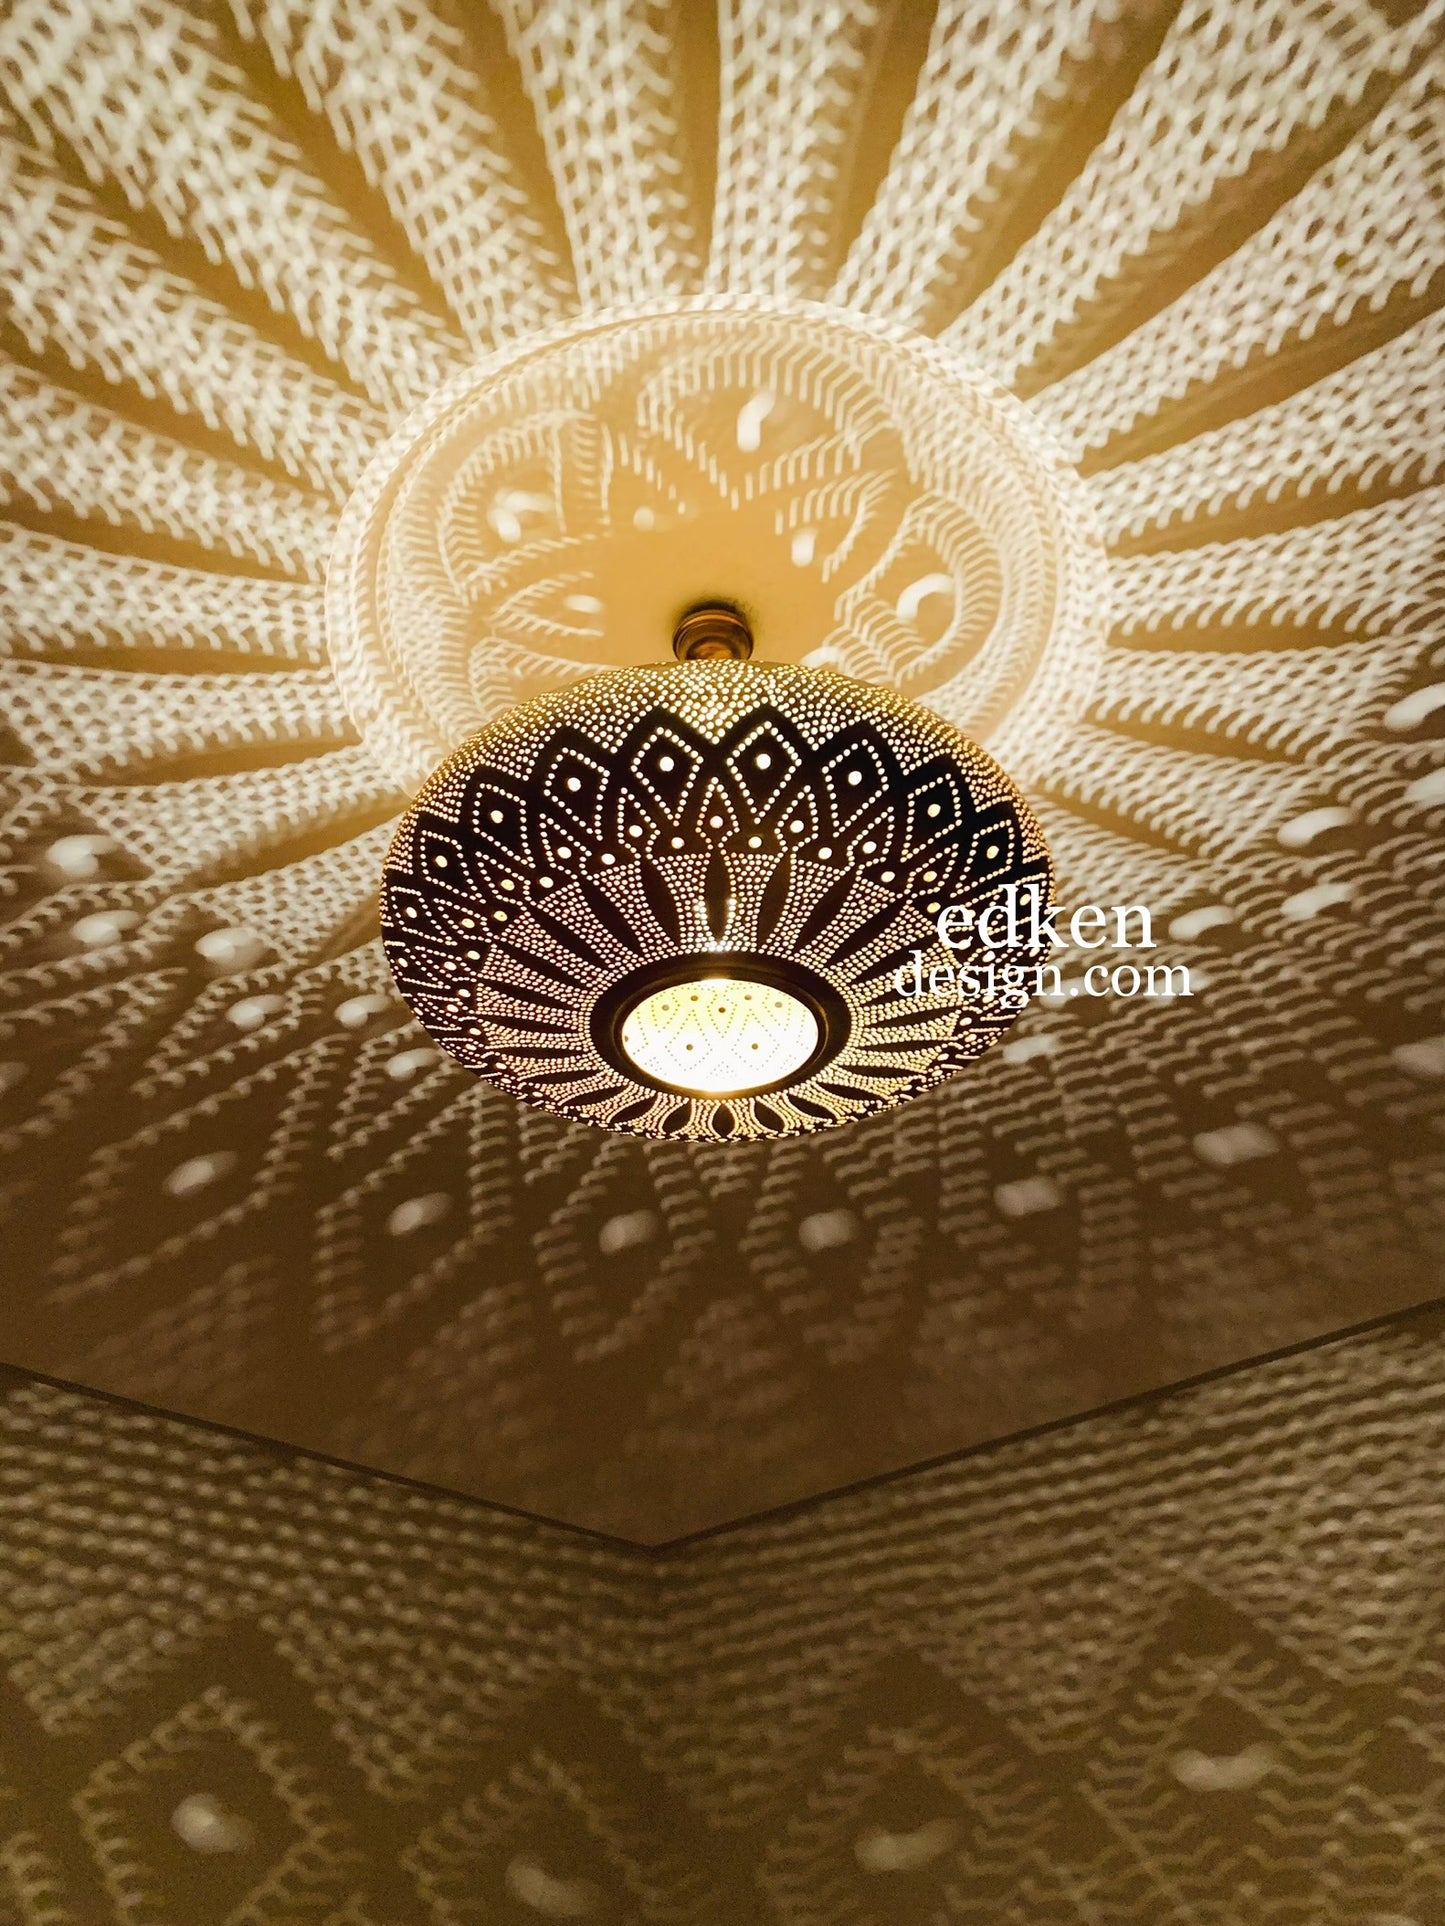 EDKEN LIGHTS - Side View Morocco Ceiling Lamp Shades Fixture pierced Brass Lozenge Hanging Lights Handmade Brass Morocco Home Decor Lighting